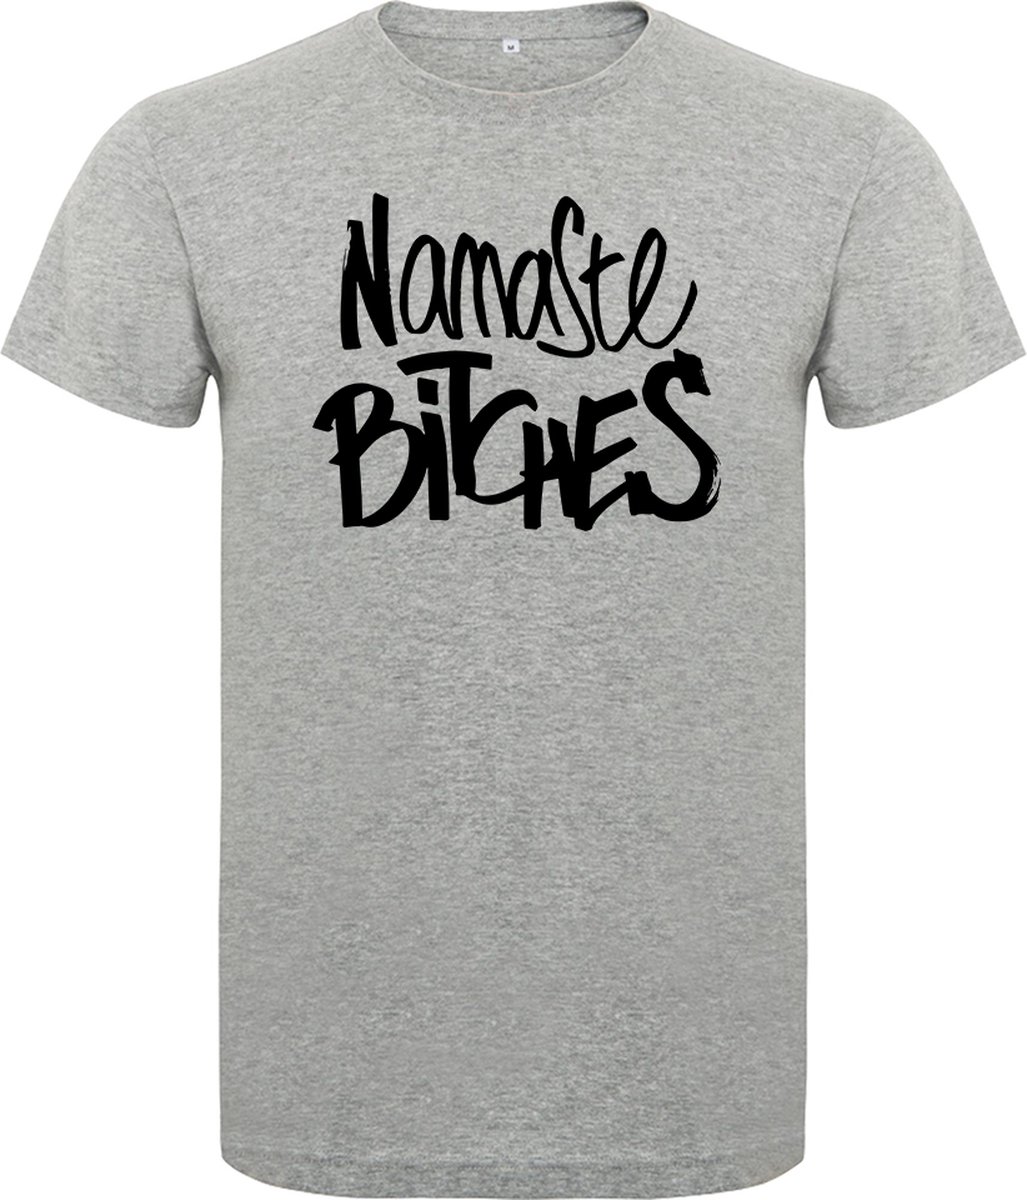 T-Shirt - Casual T-Shirt - Fun T-Shirt - Fun Tekst - Lifestyle T-Shirt - Grappig - Mood - Sport - Yoga - Relax - Vibe - Namaste Bitches - Maat L